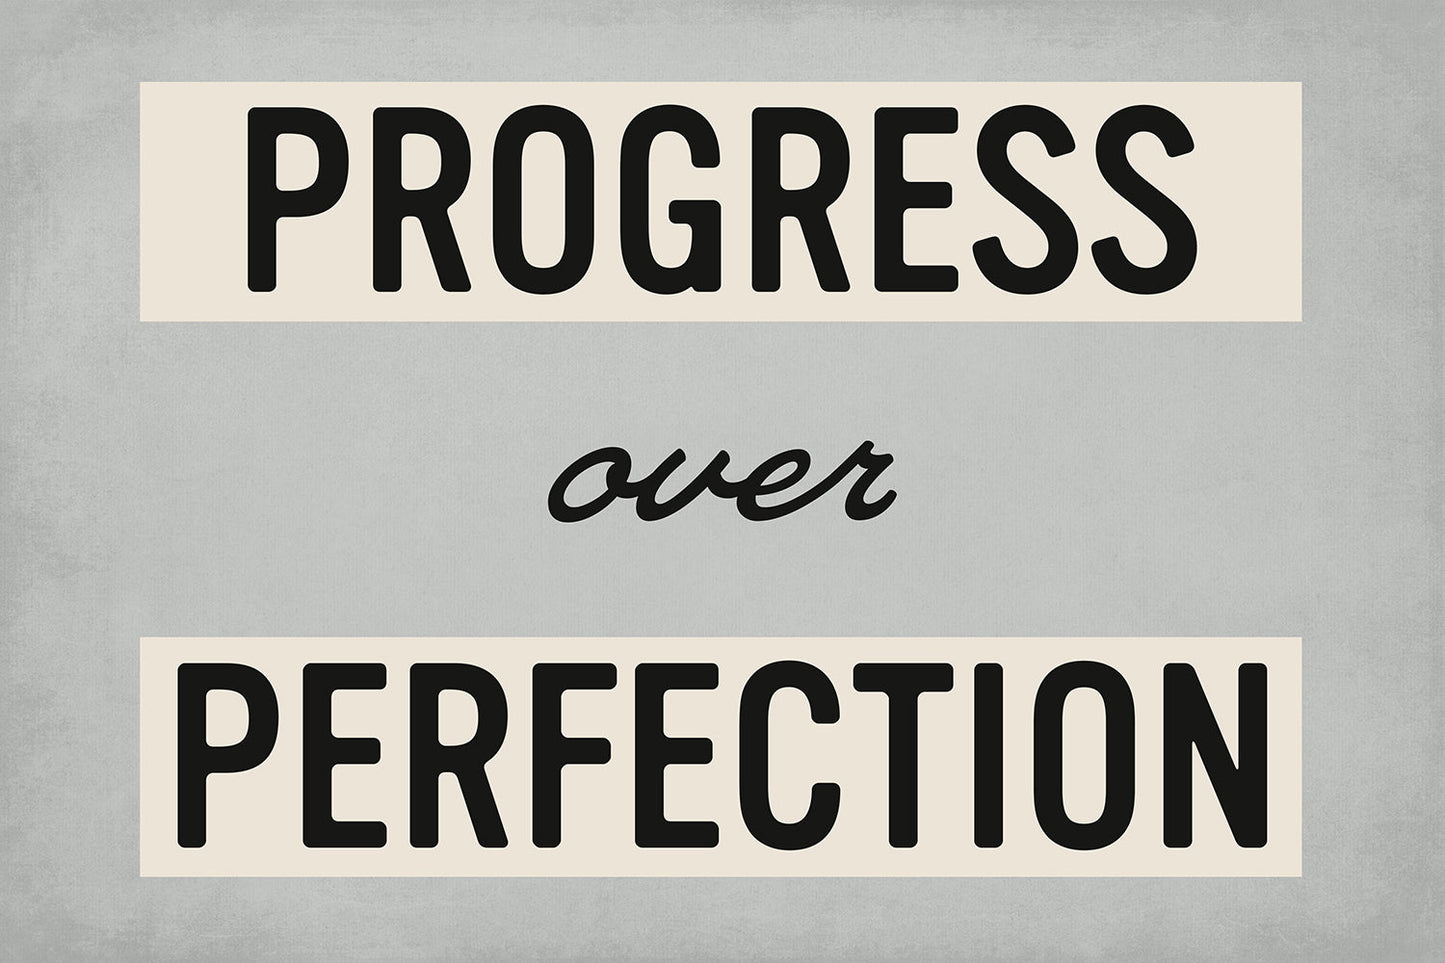 Progress Over Perfection Motivational Wall Art Print